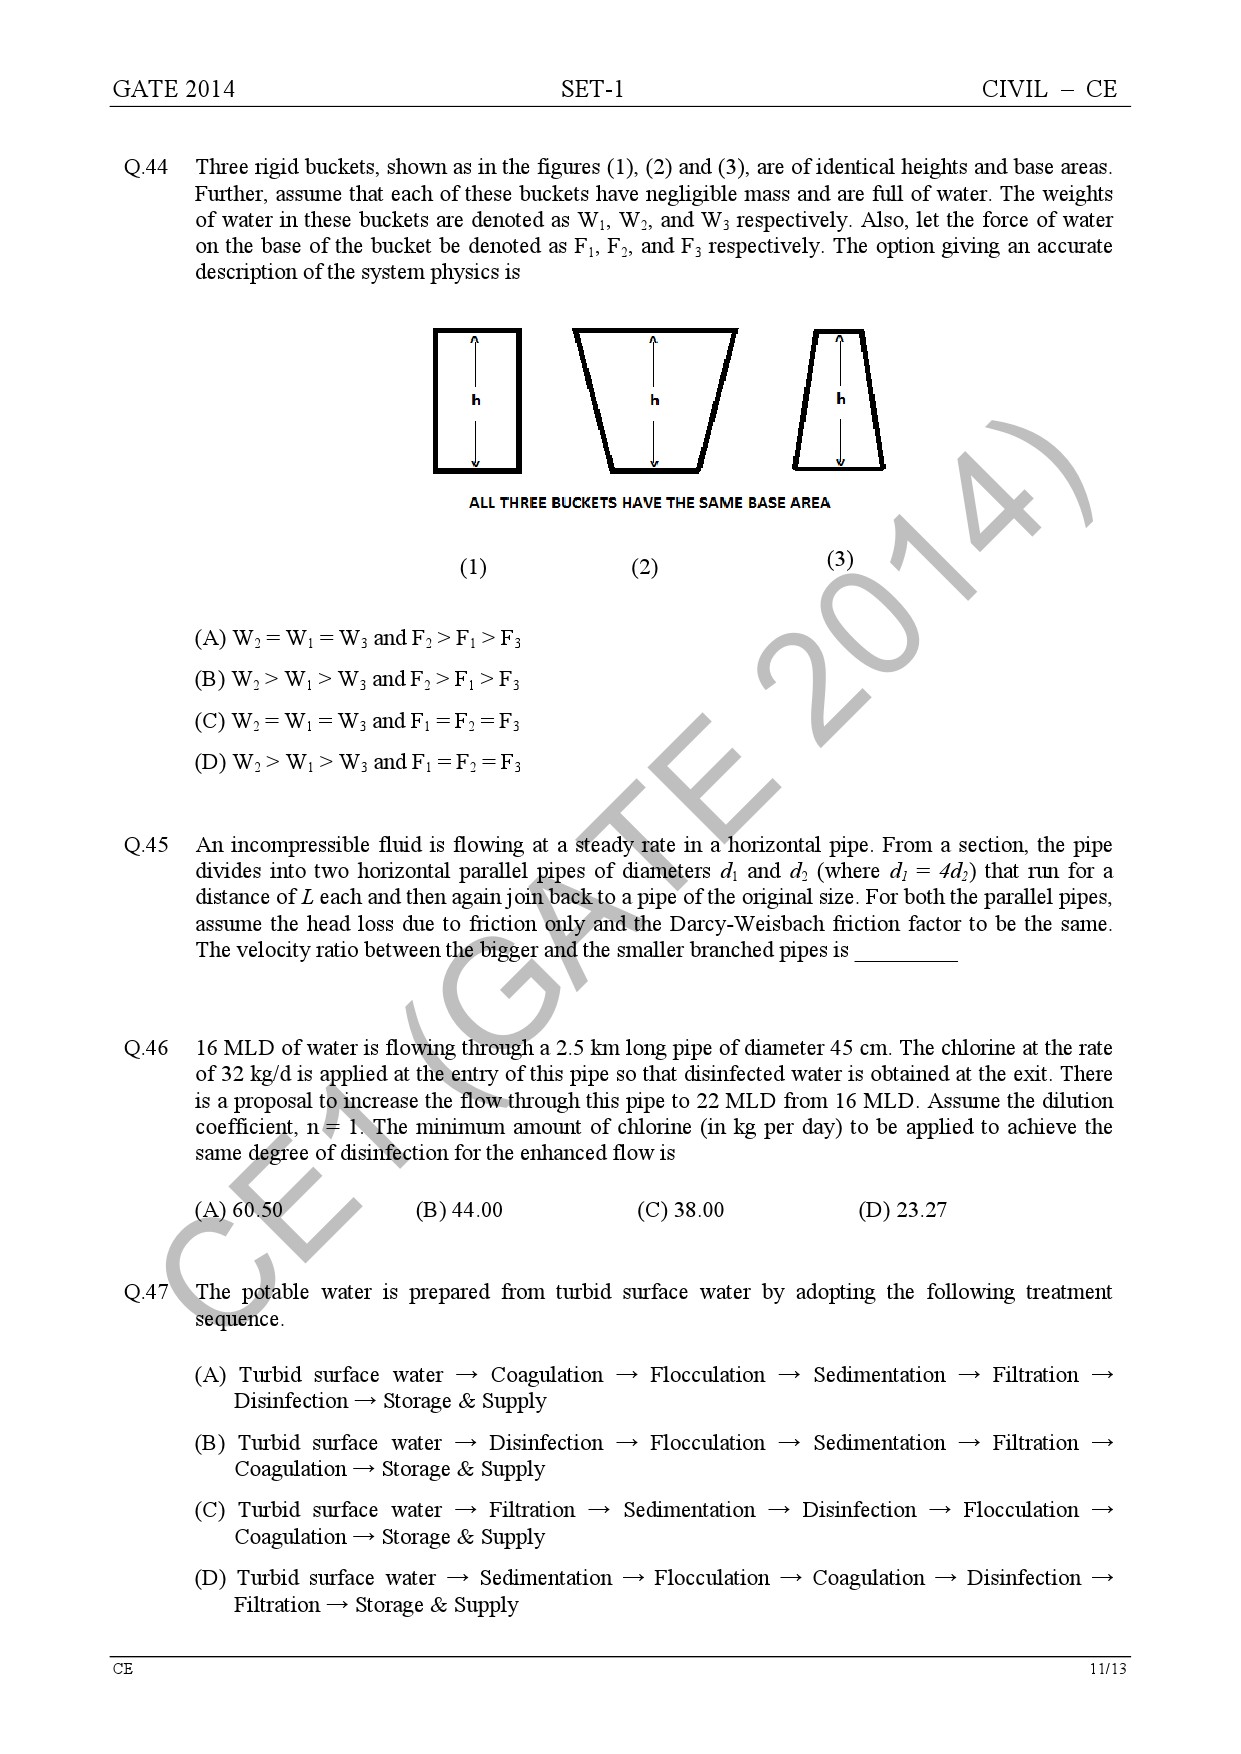 GATE Exam Question Paper 2014 Civil Engineering Set 1 17